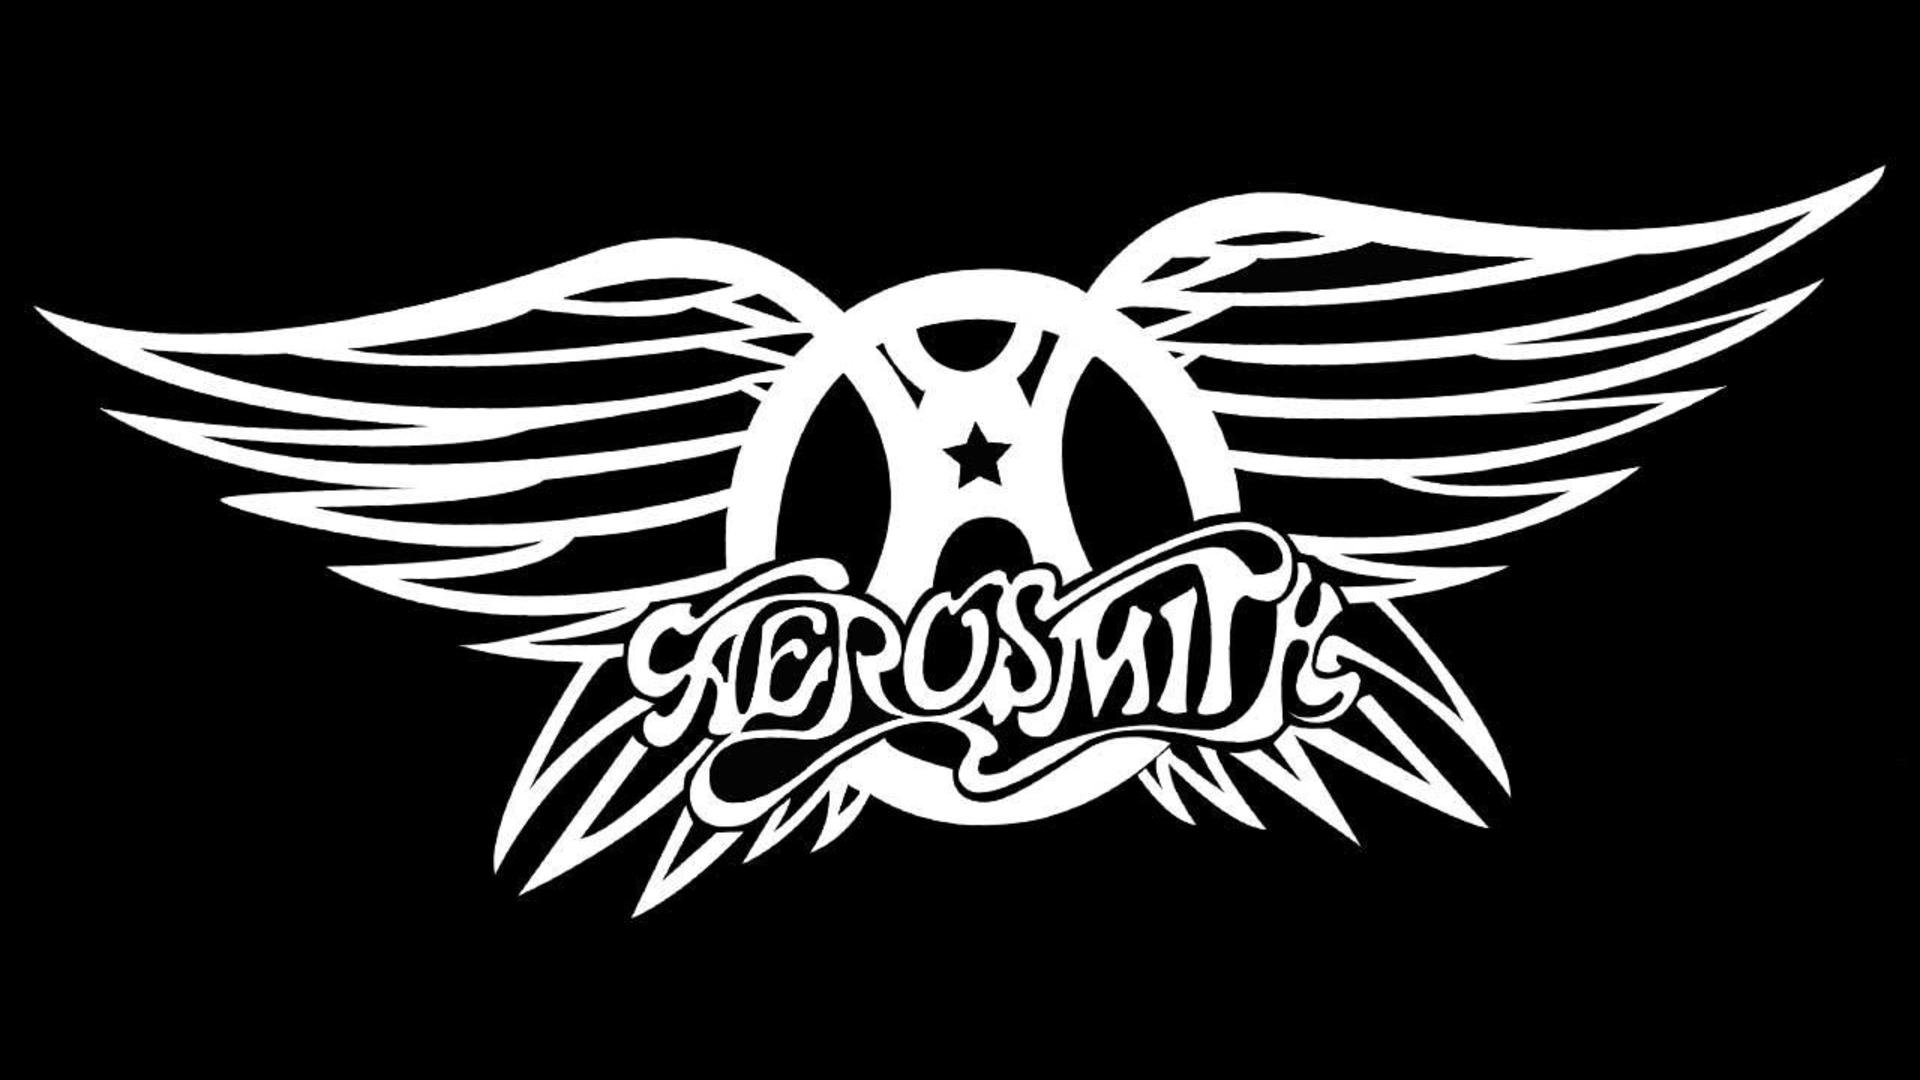 Best Aerosmith wallpaper ID:97094 for High Resolution full hd 1080p PC